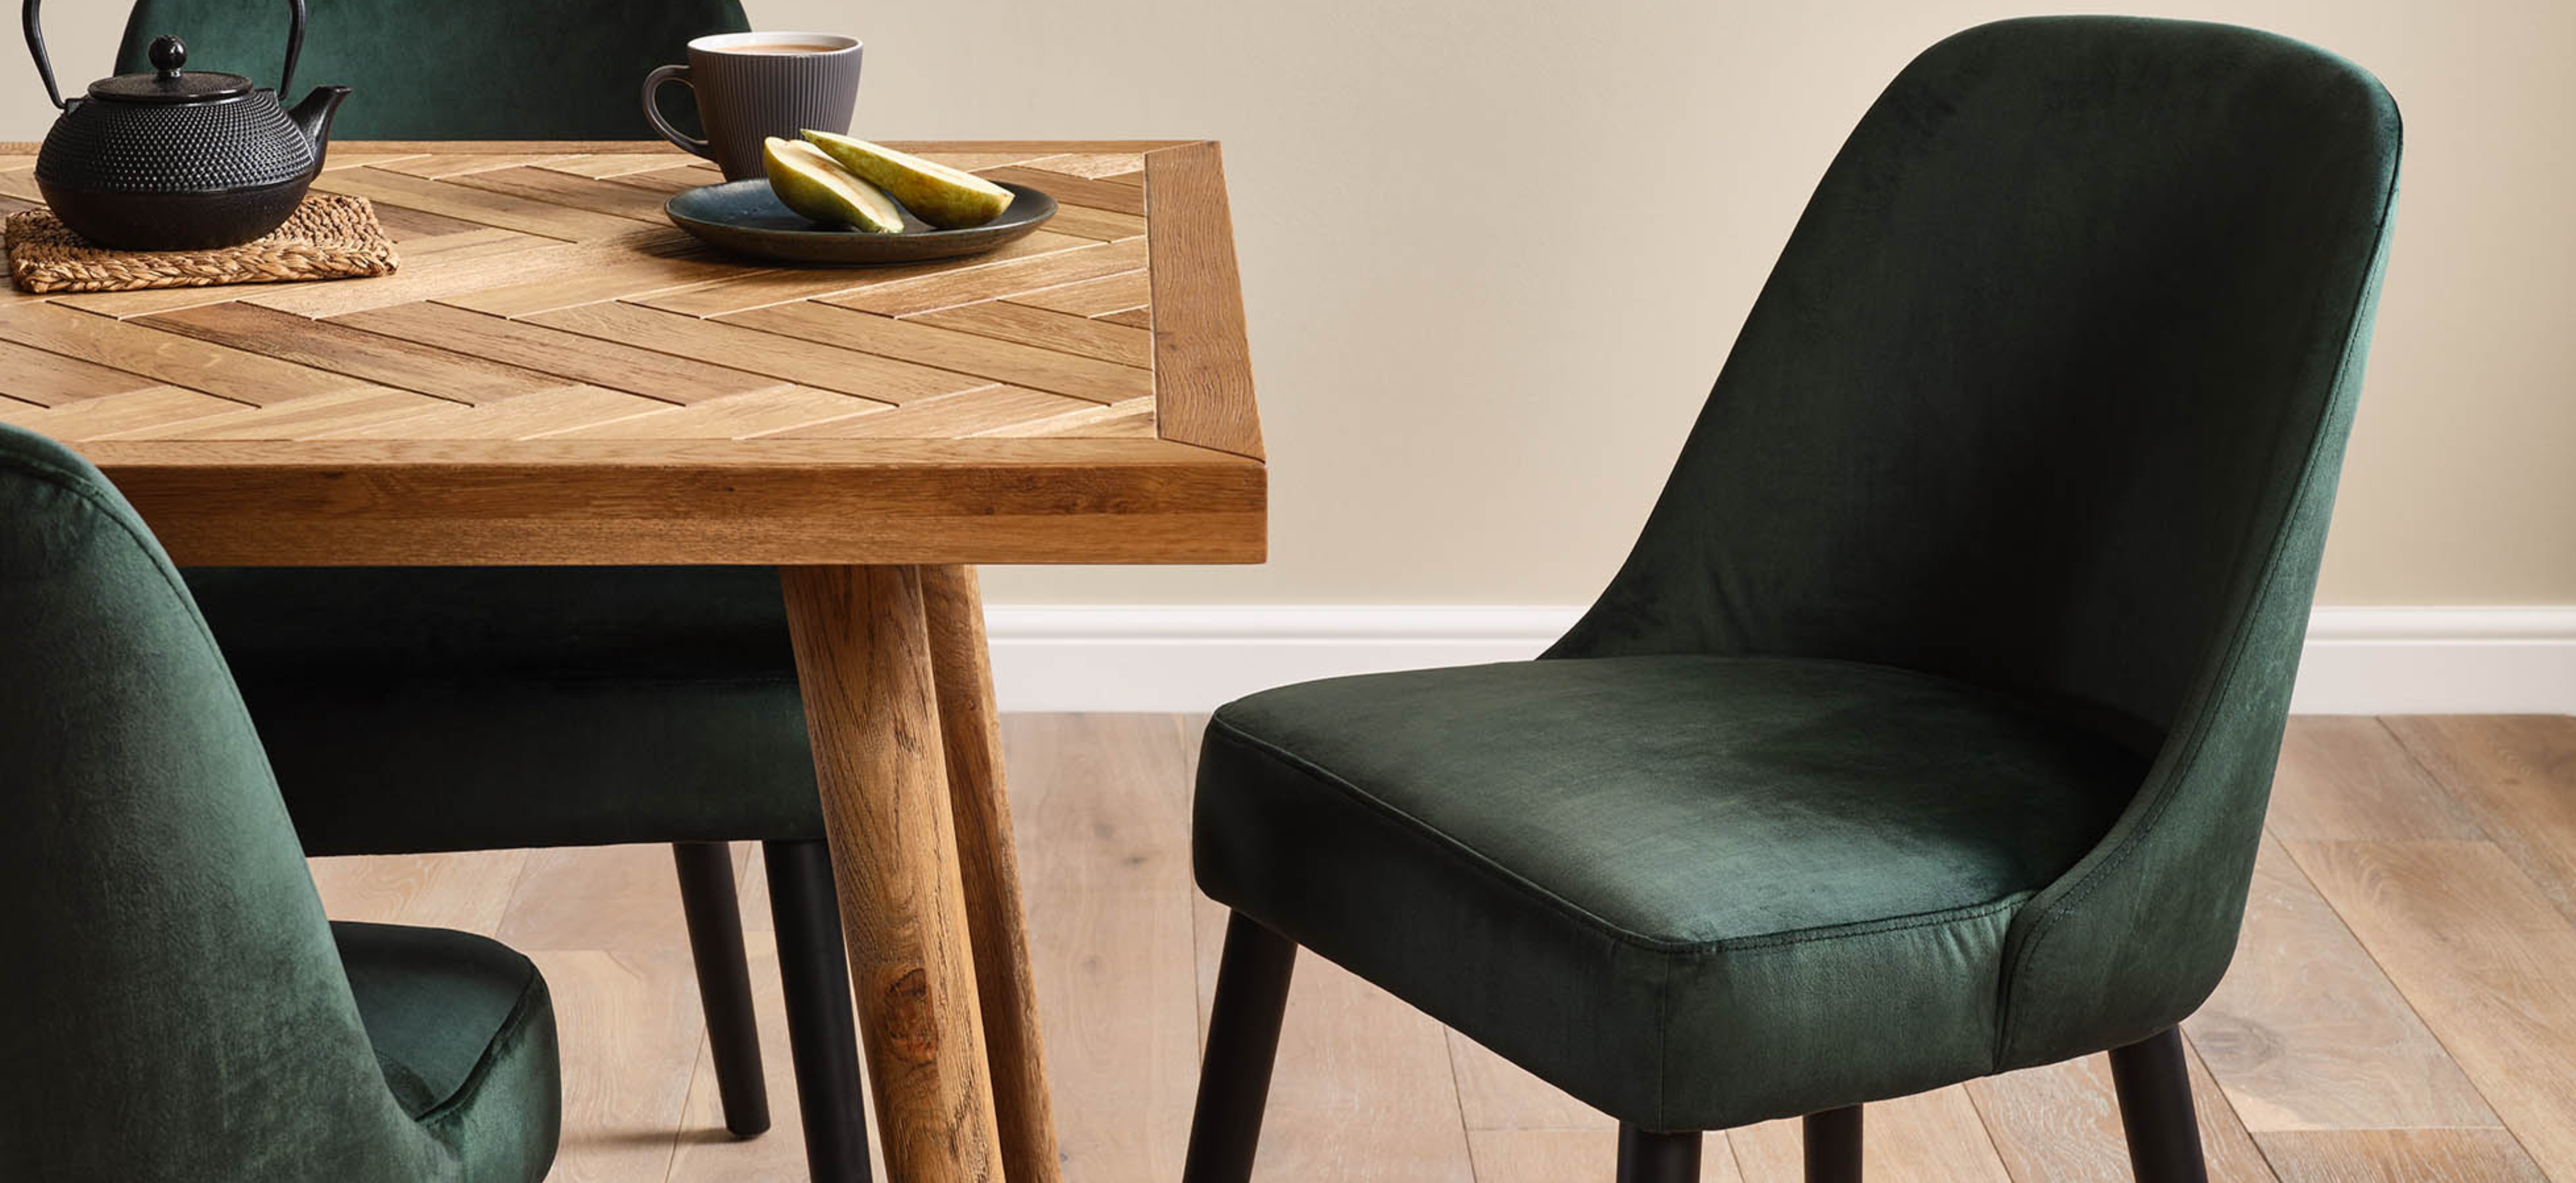 Oak furnitureland parquet table with bette green velvet chairs